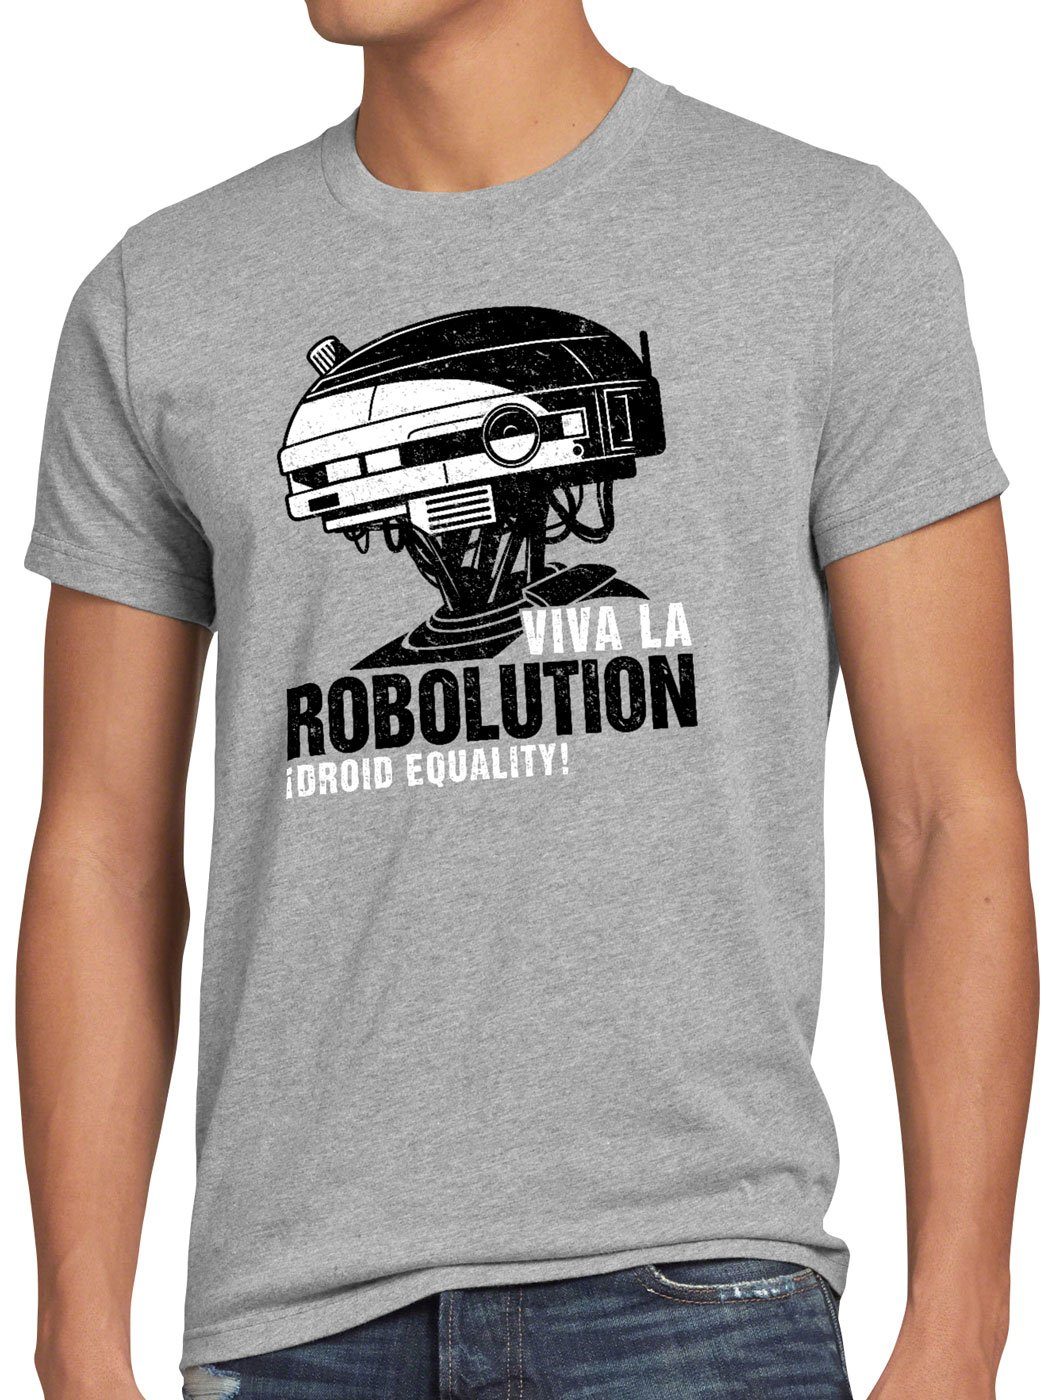 Droid Herren meliert style3 solo guevara grau T-Shirt revolution Equality Print-Shirt